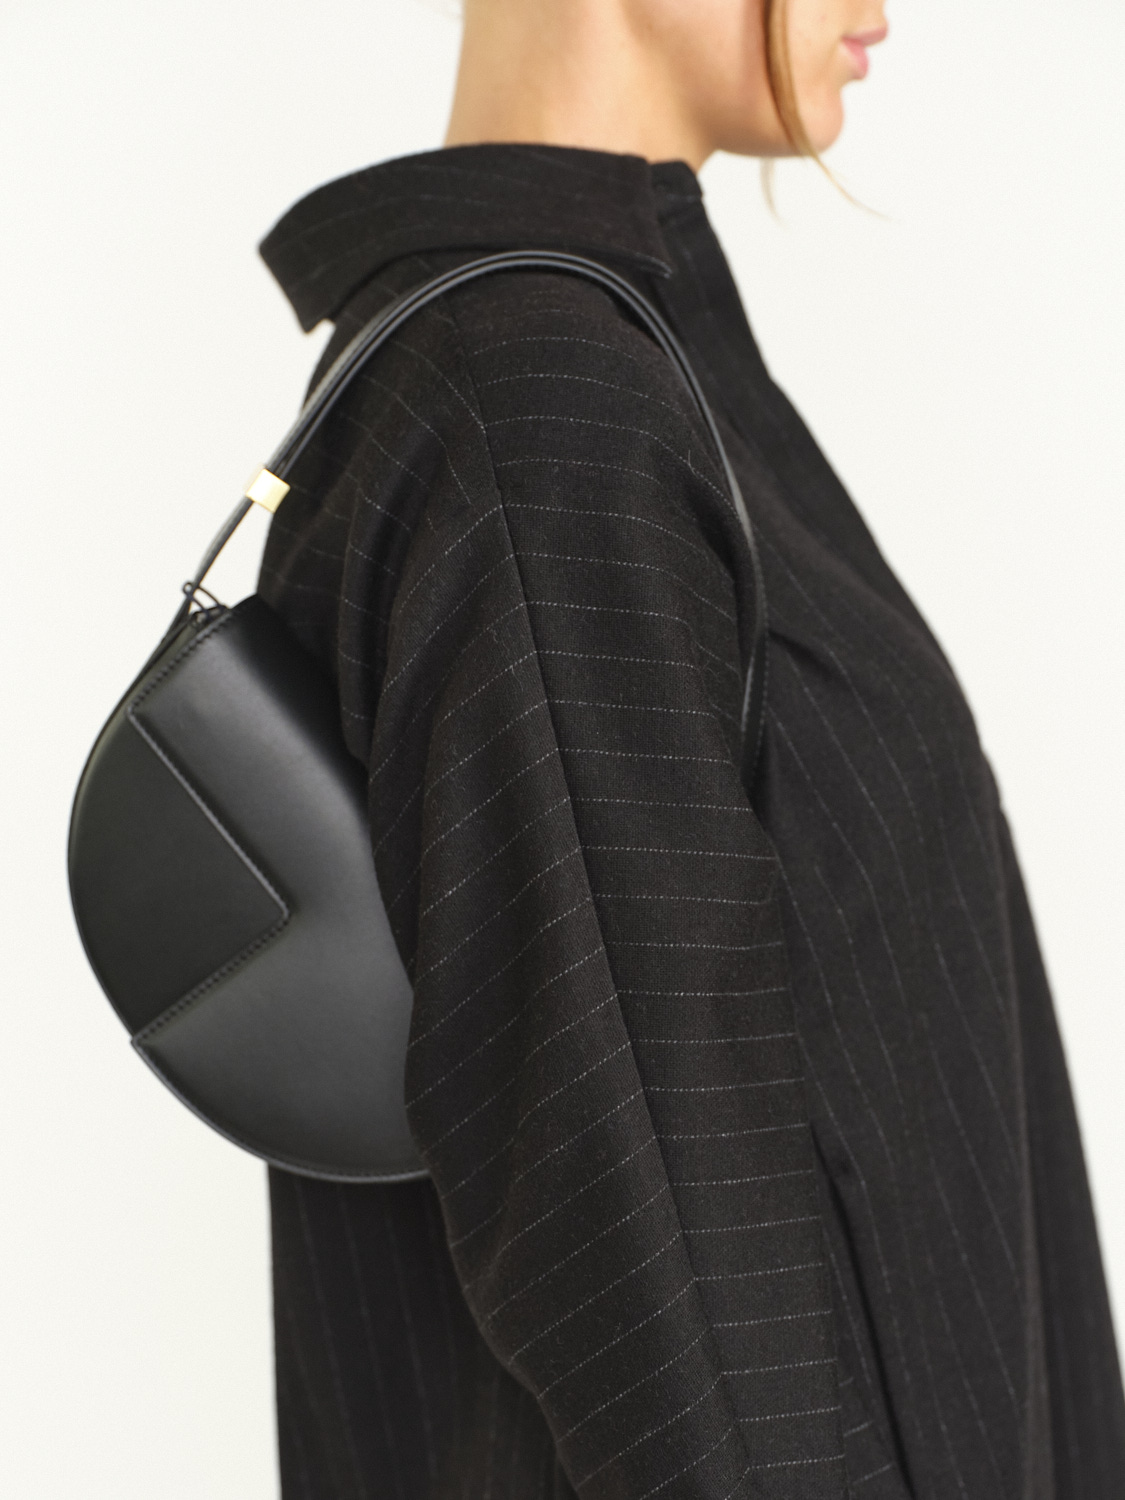 Patou Le petit Patou bag – schwarze Tasche aus Kalbsleder   schwarz One Size